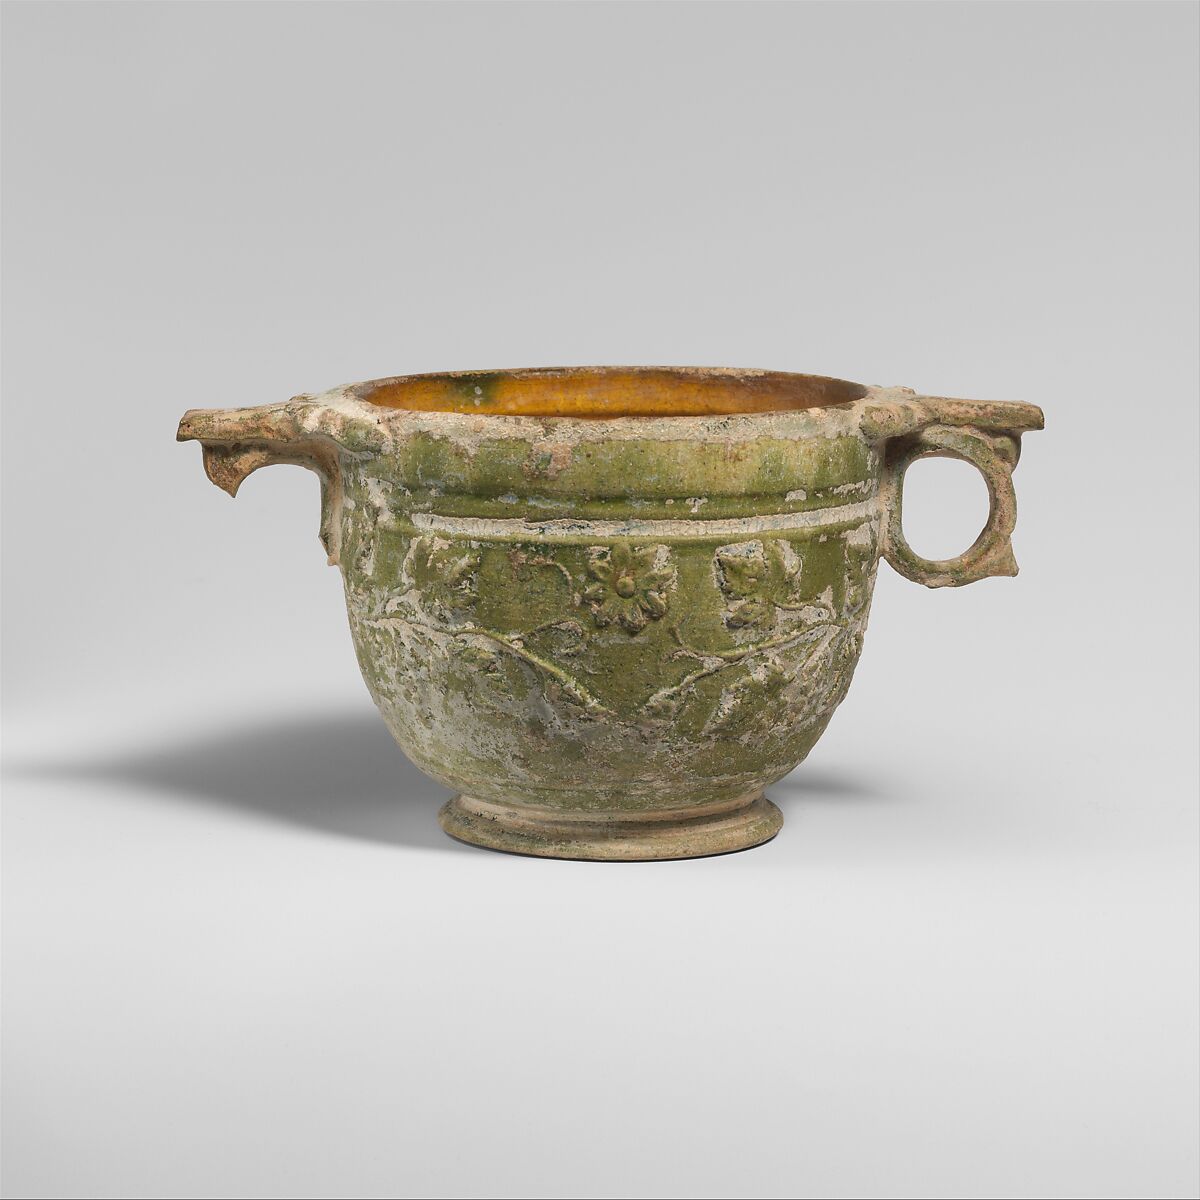 Terracotta lead-glazed scyphus (drinking cup), Terracotta, Roman